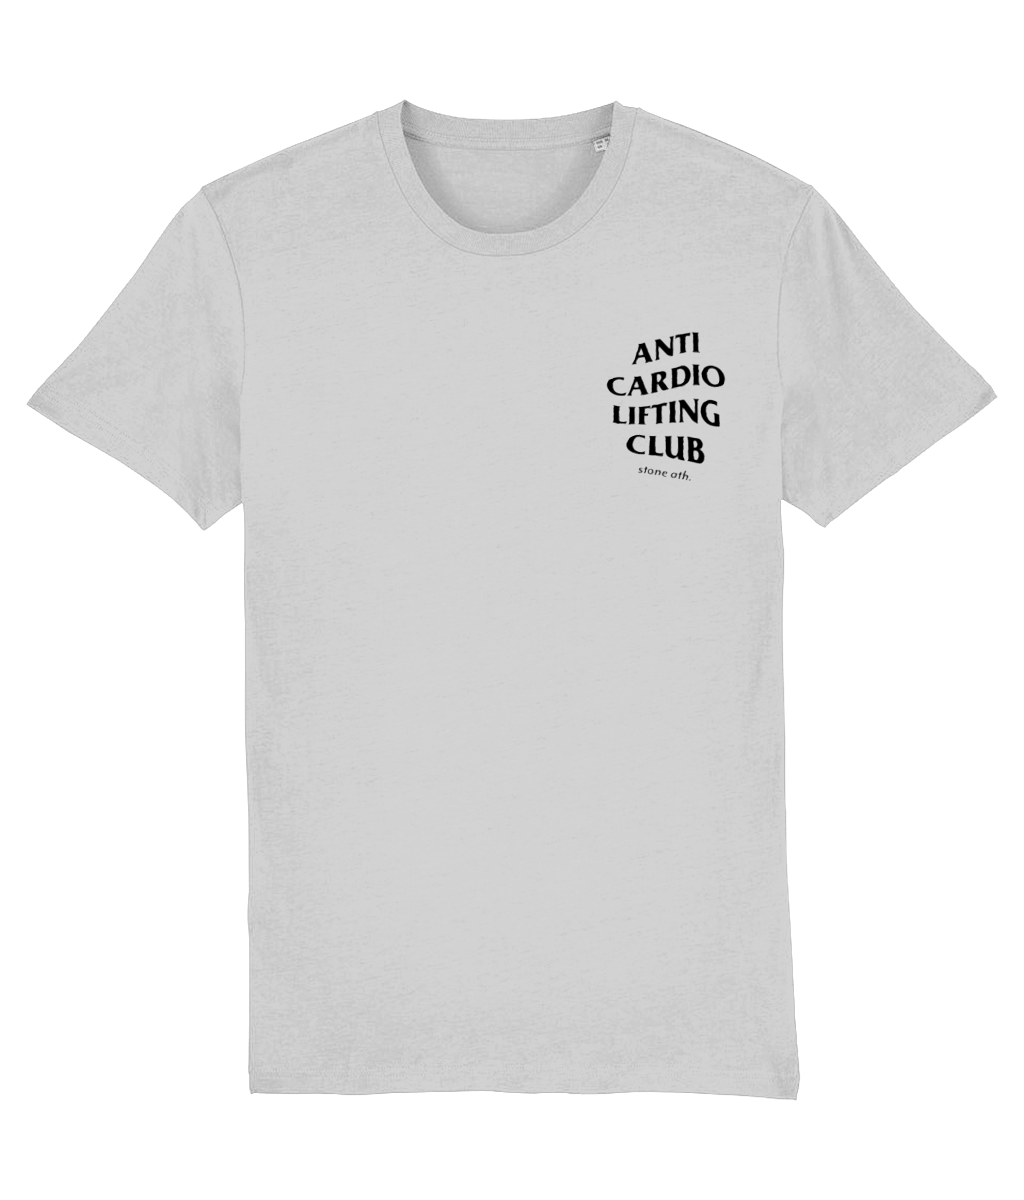 Anti Cardio Lifting Club t-shirt